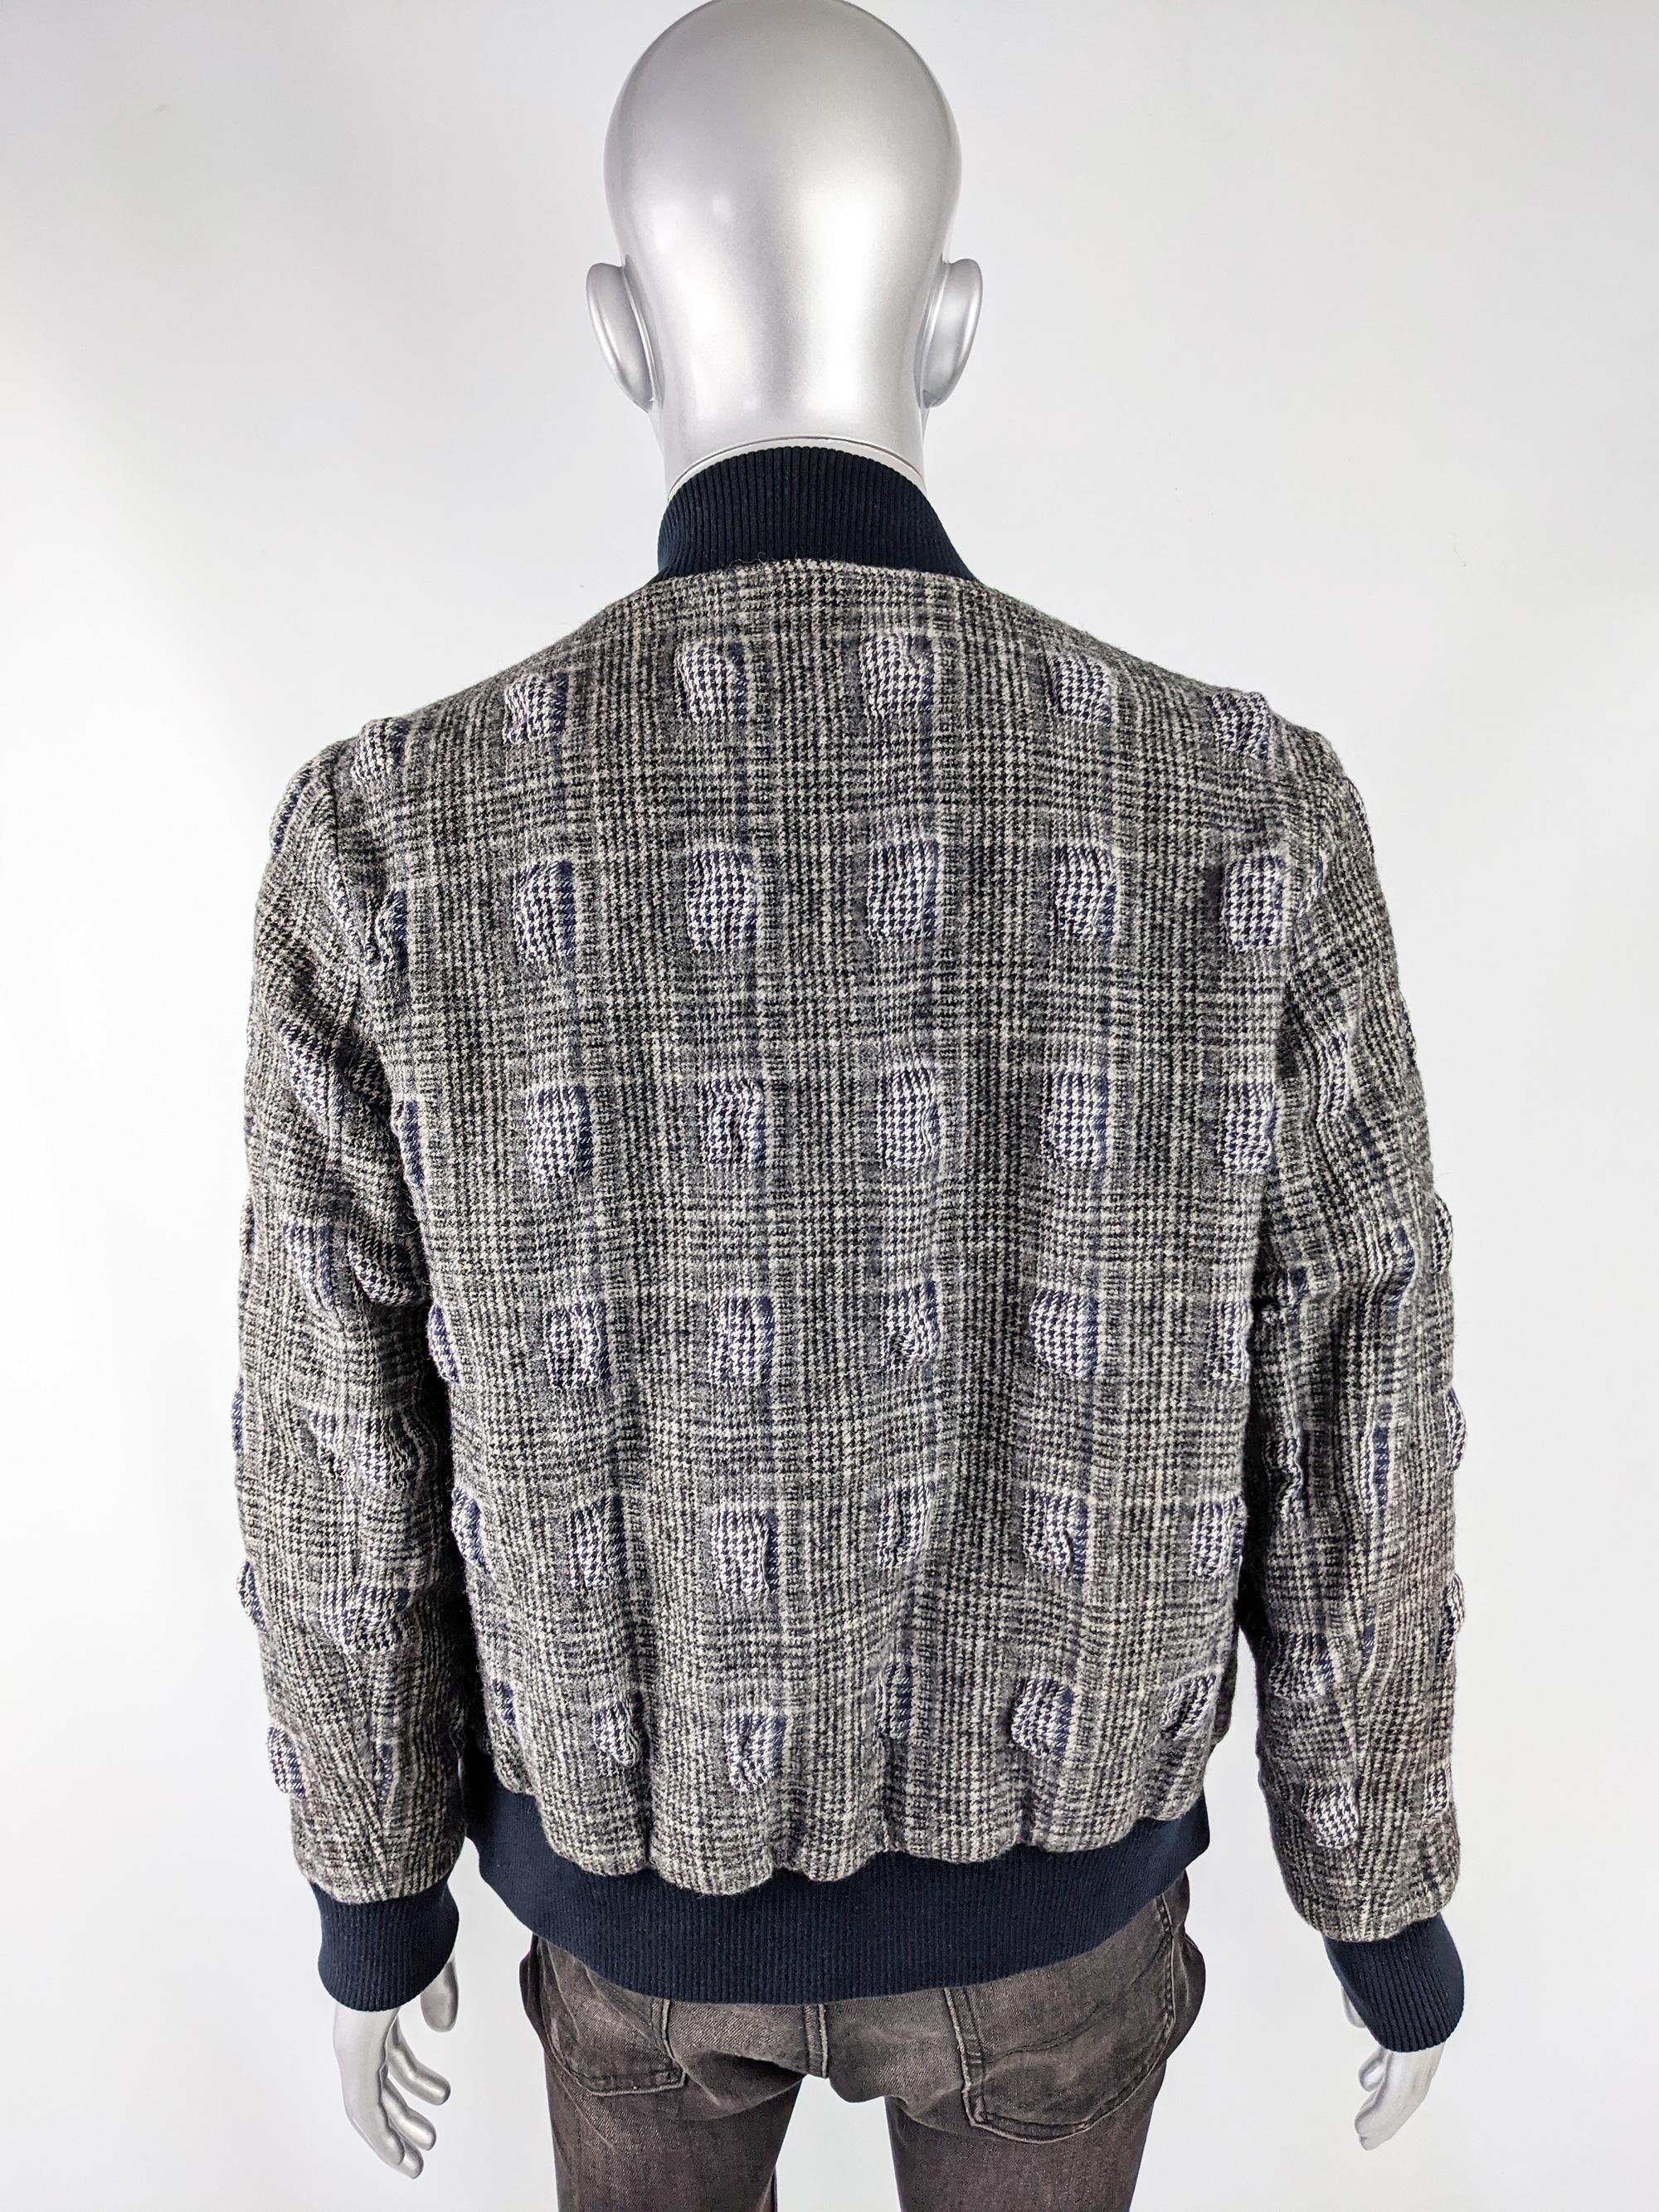 Men's John Galliano Mens Prince of Wales Check Textured Wool Bomber Jacket, 2000s